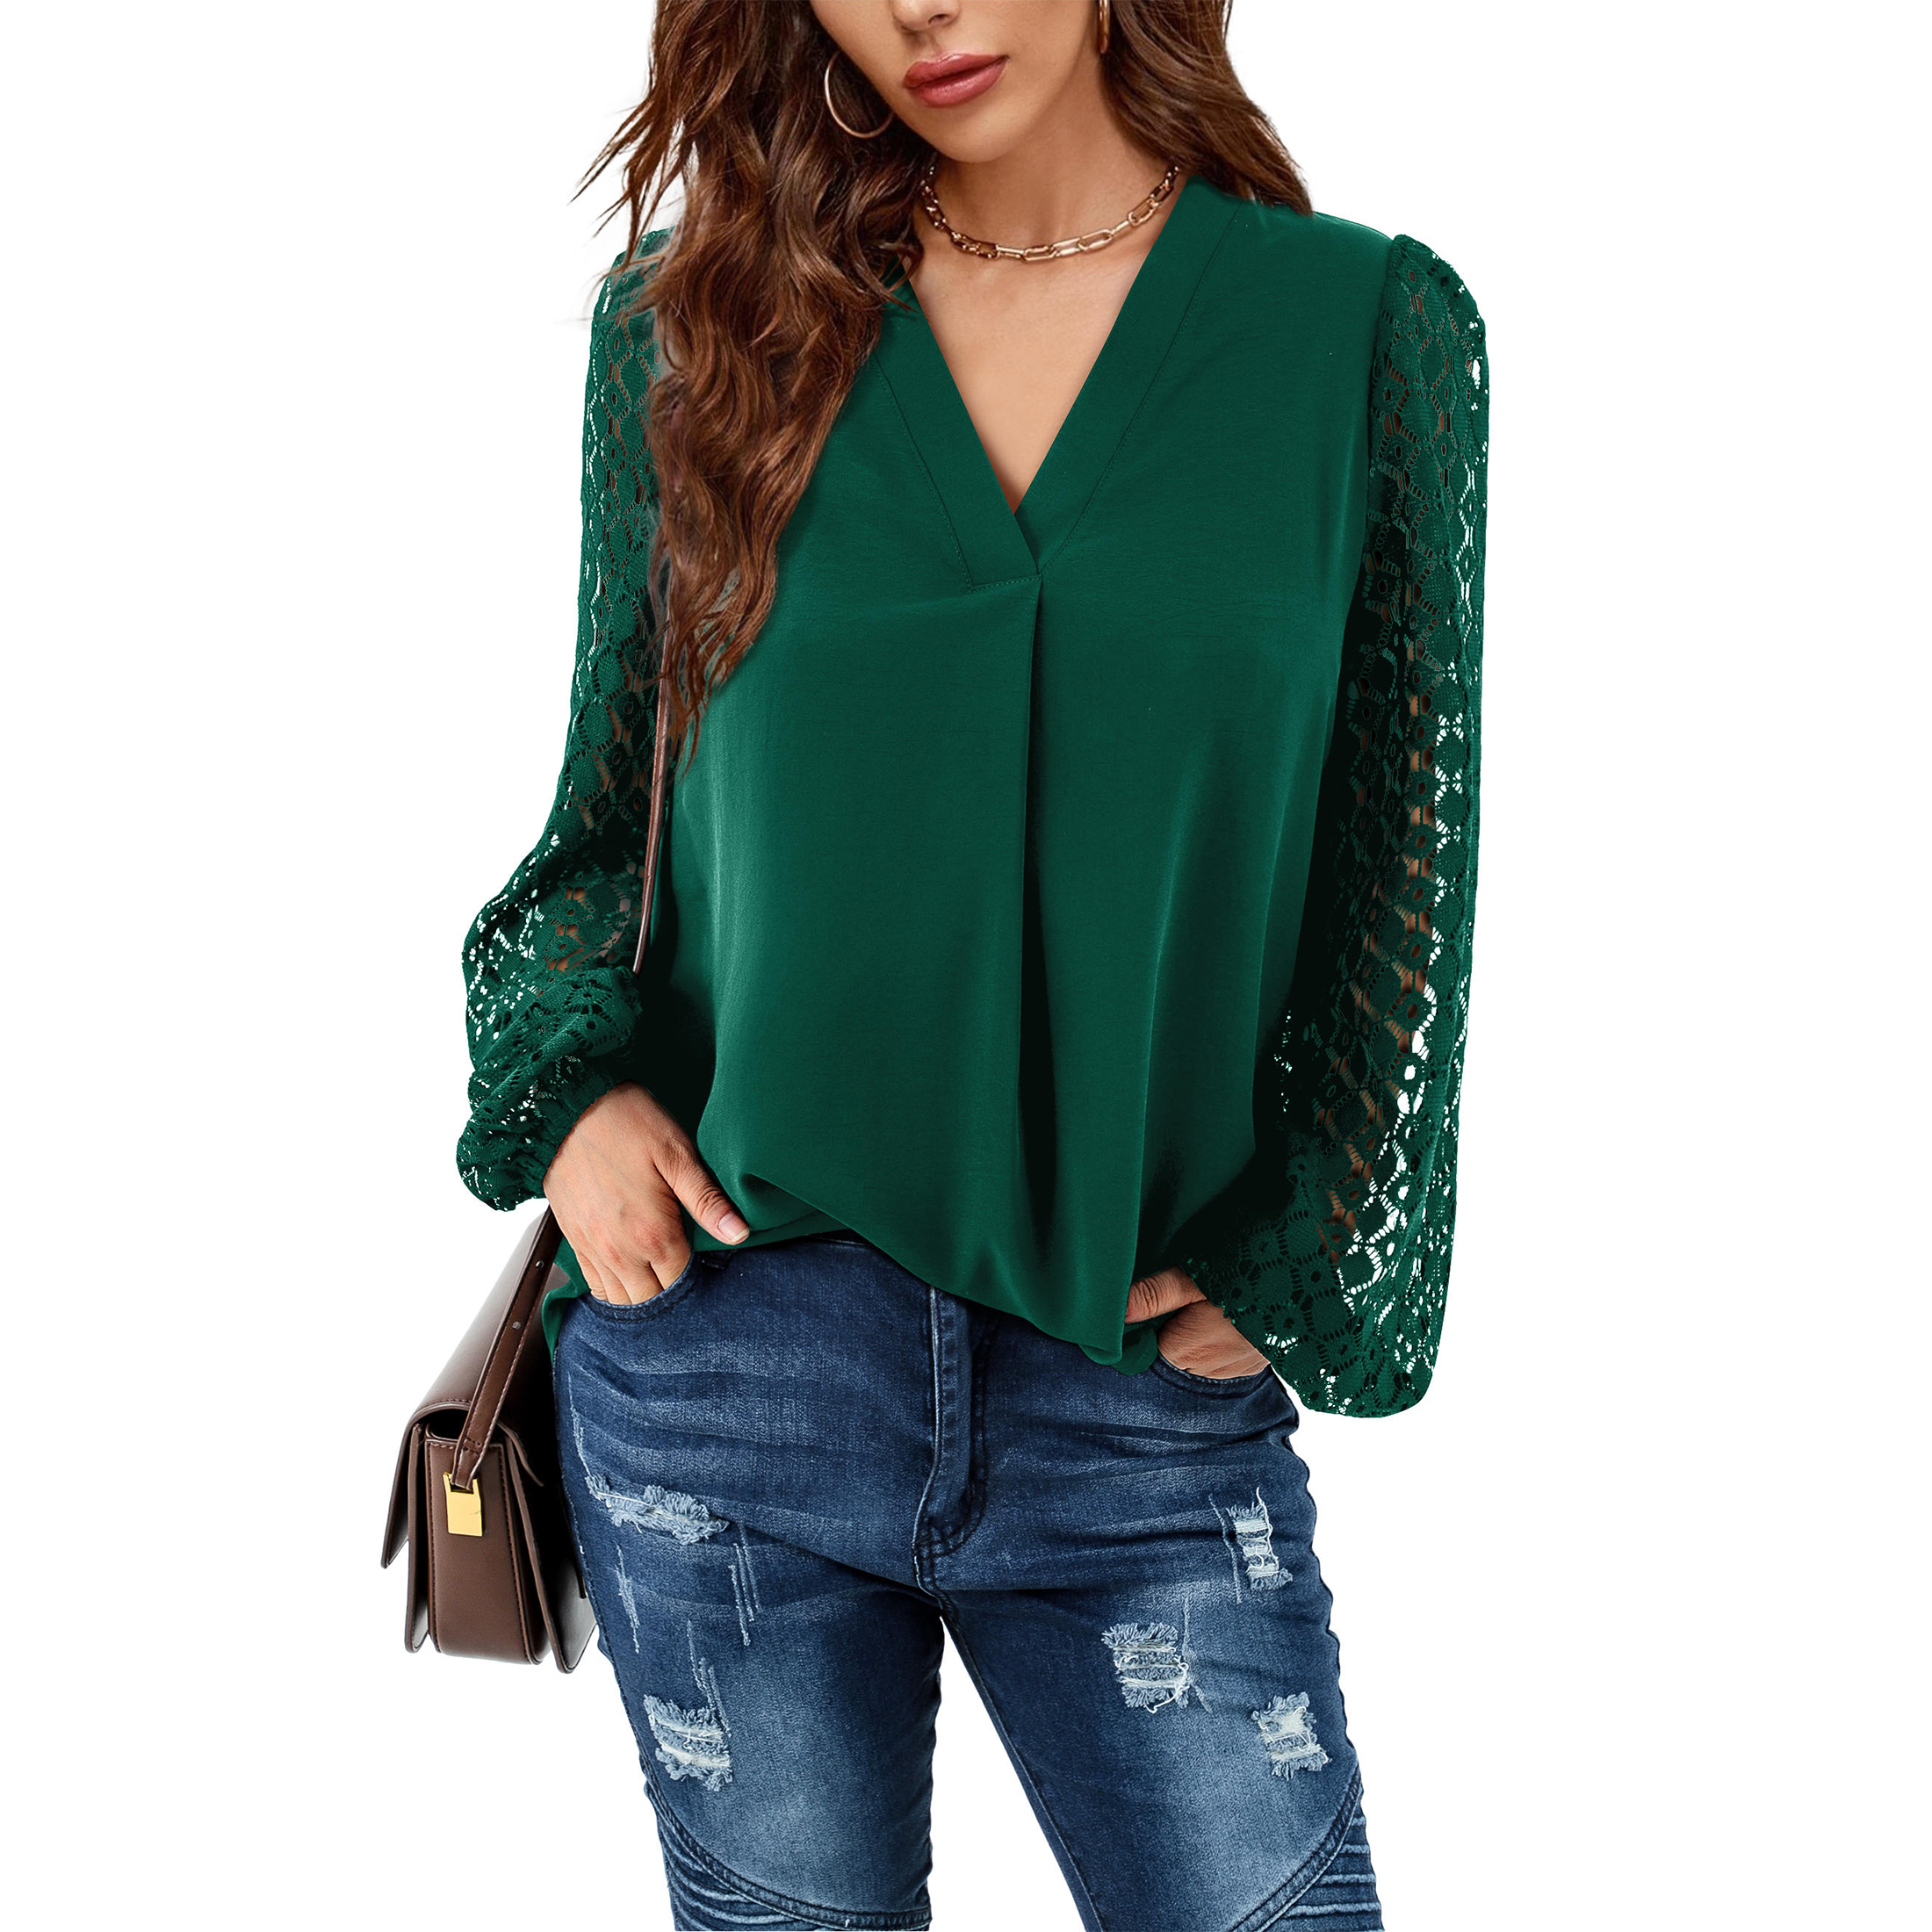 Amoretu Womens Shirts Casual V Neck Long Sleeve Blouses Plain Tops Green L - image 2 of 4